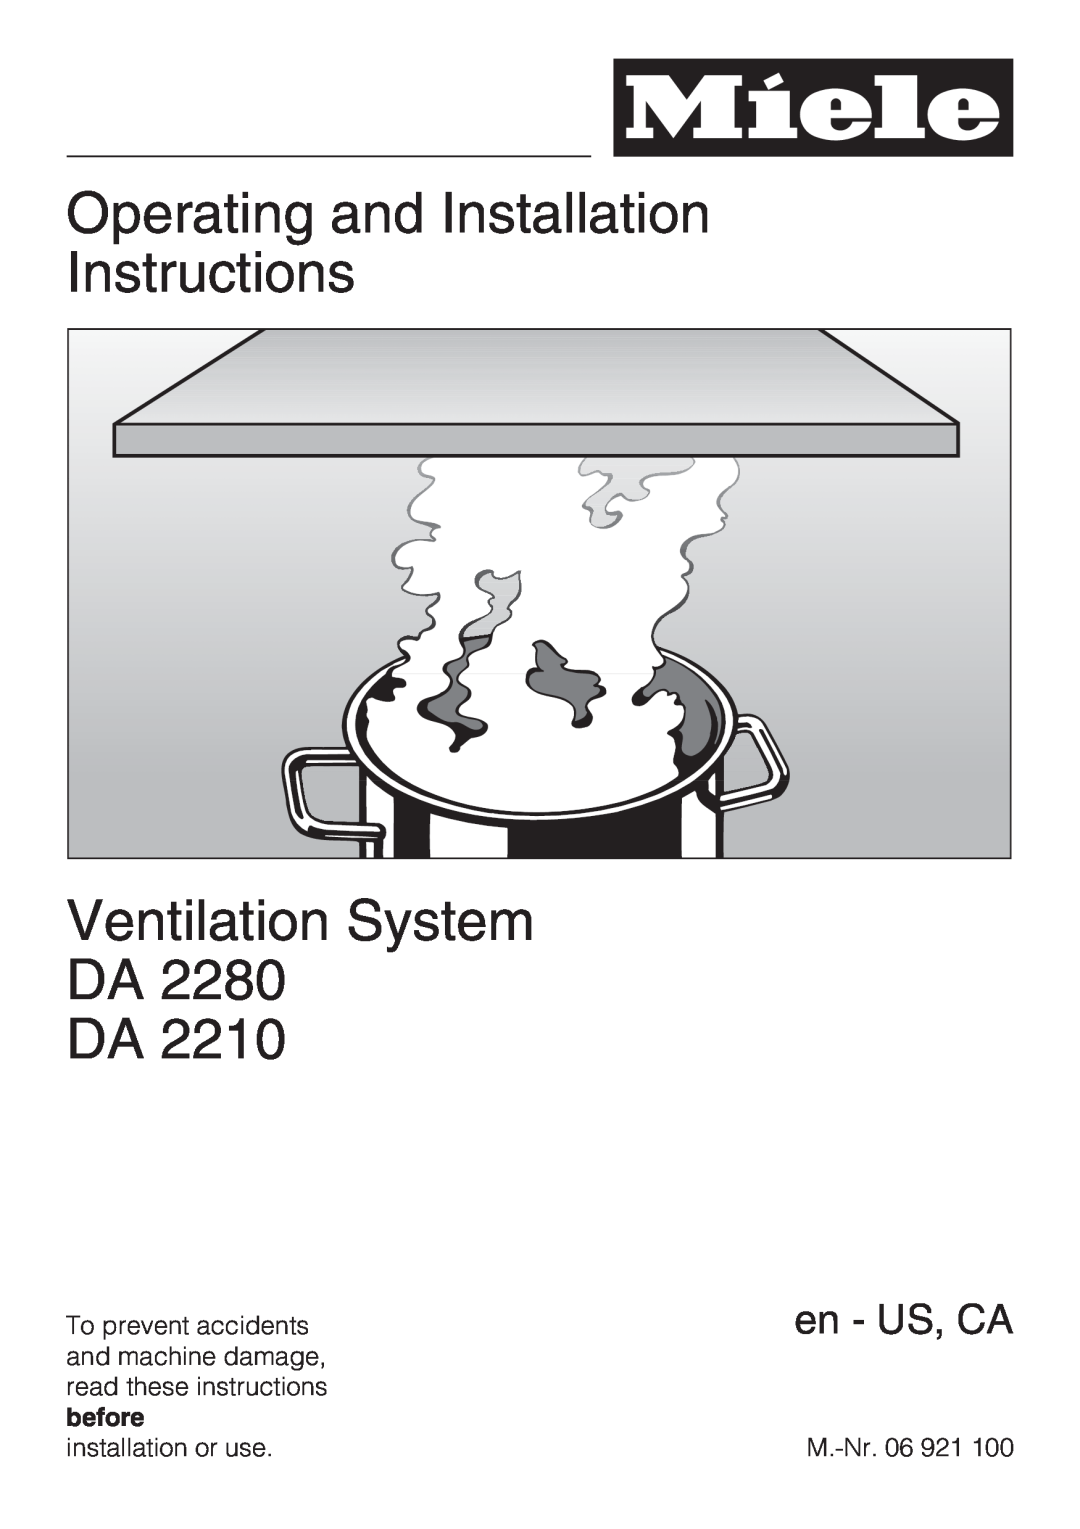 Miele DA2280 installation instructions Operating and Installation Instructions, Ventilation System DA DA, en - US, CA 